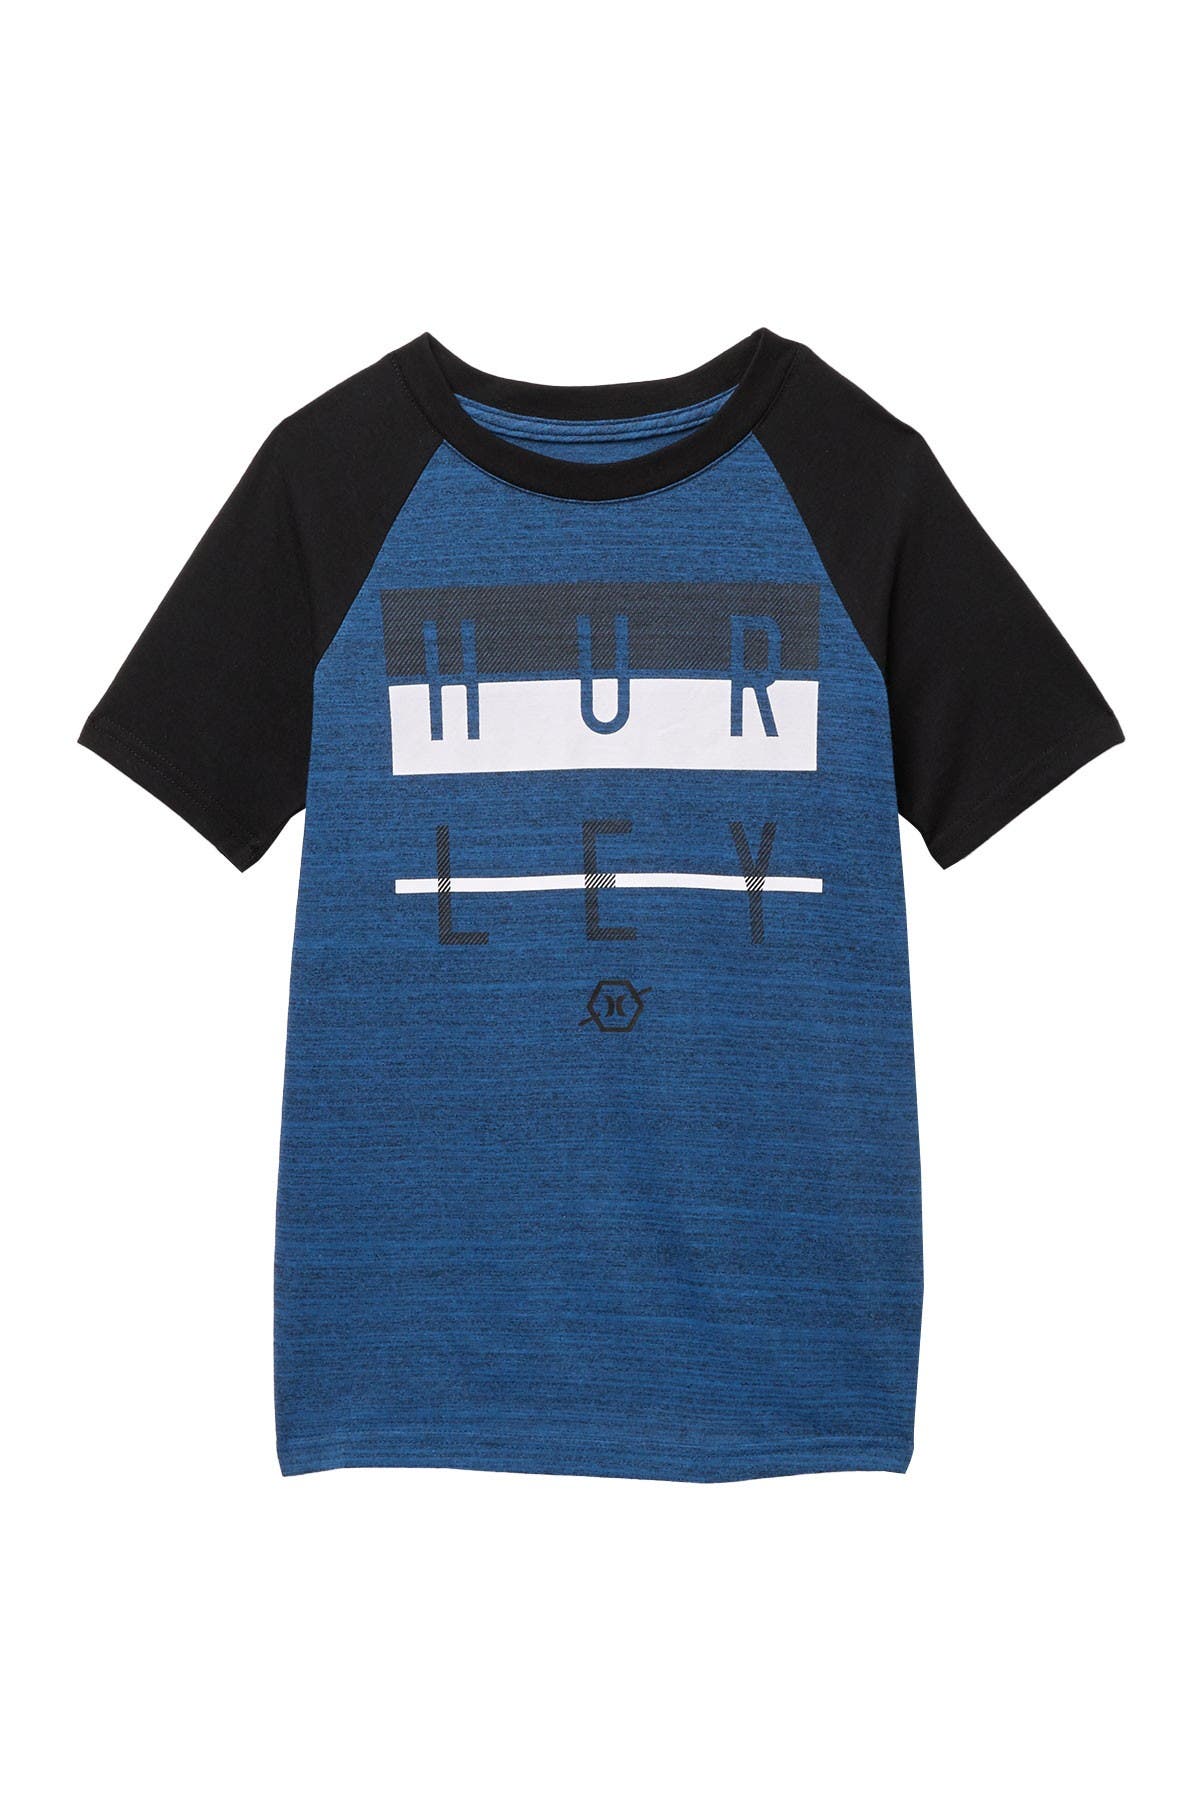 Hurley Kids' Streaky Raglan Upf 50+ T-shirt In C3rpacific